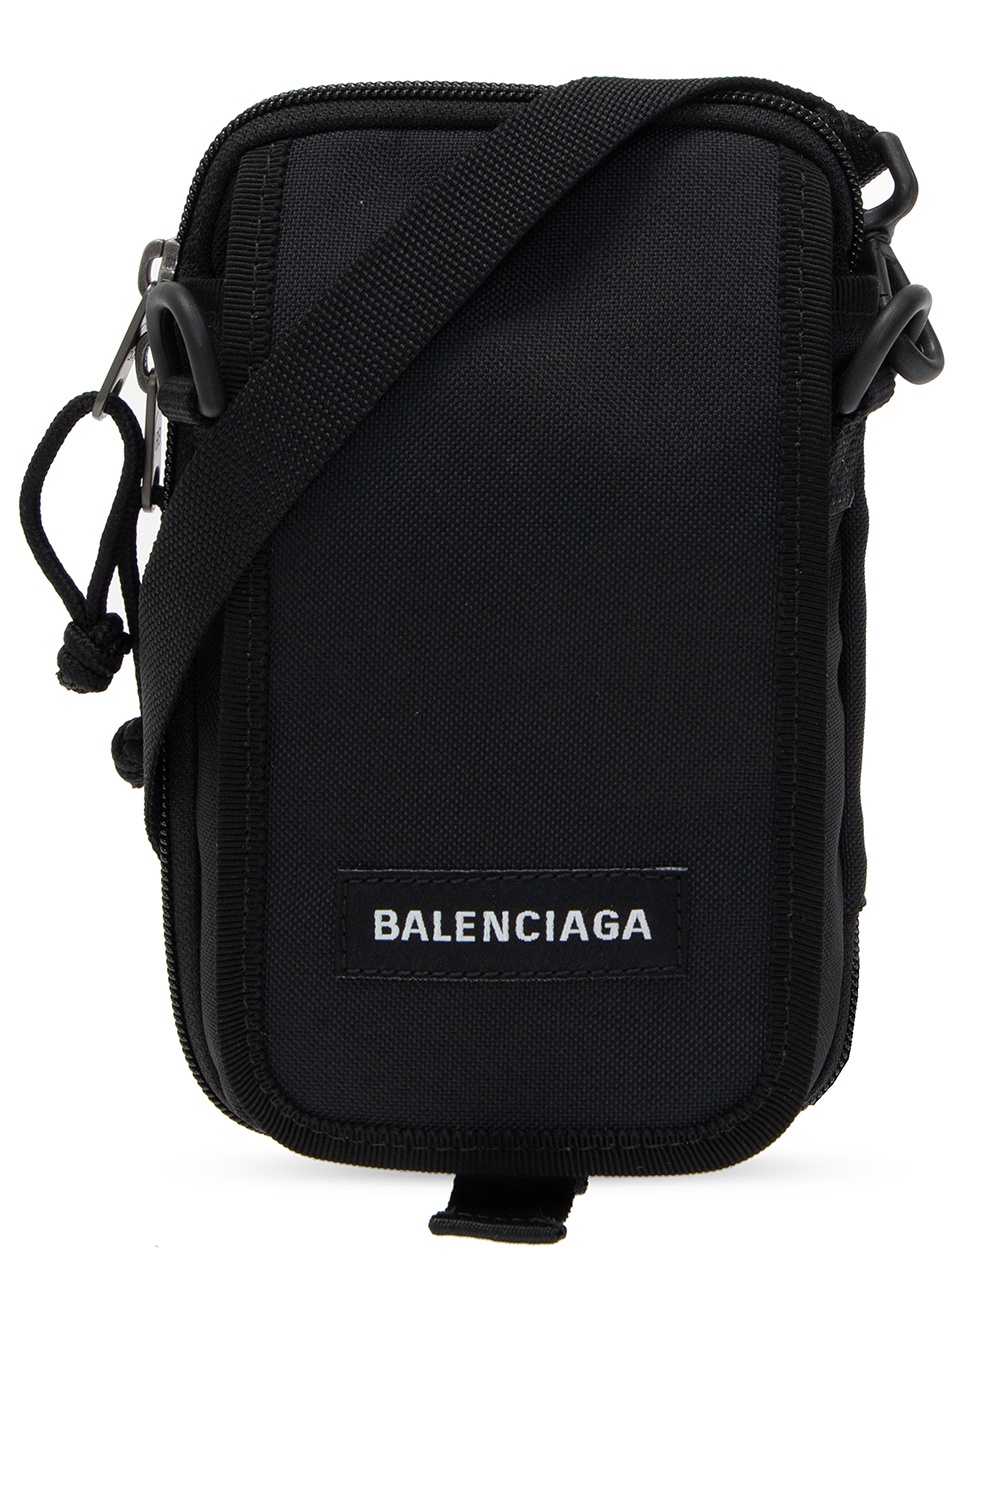 Balenciaga bottle cup mini bag small pochette shoulder bag  กระเปา